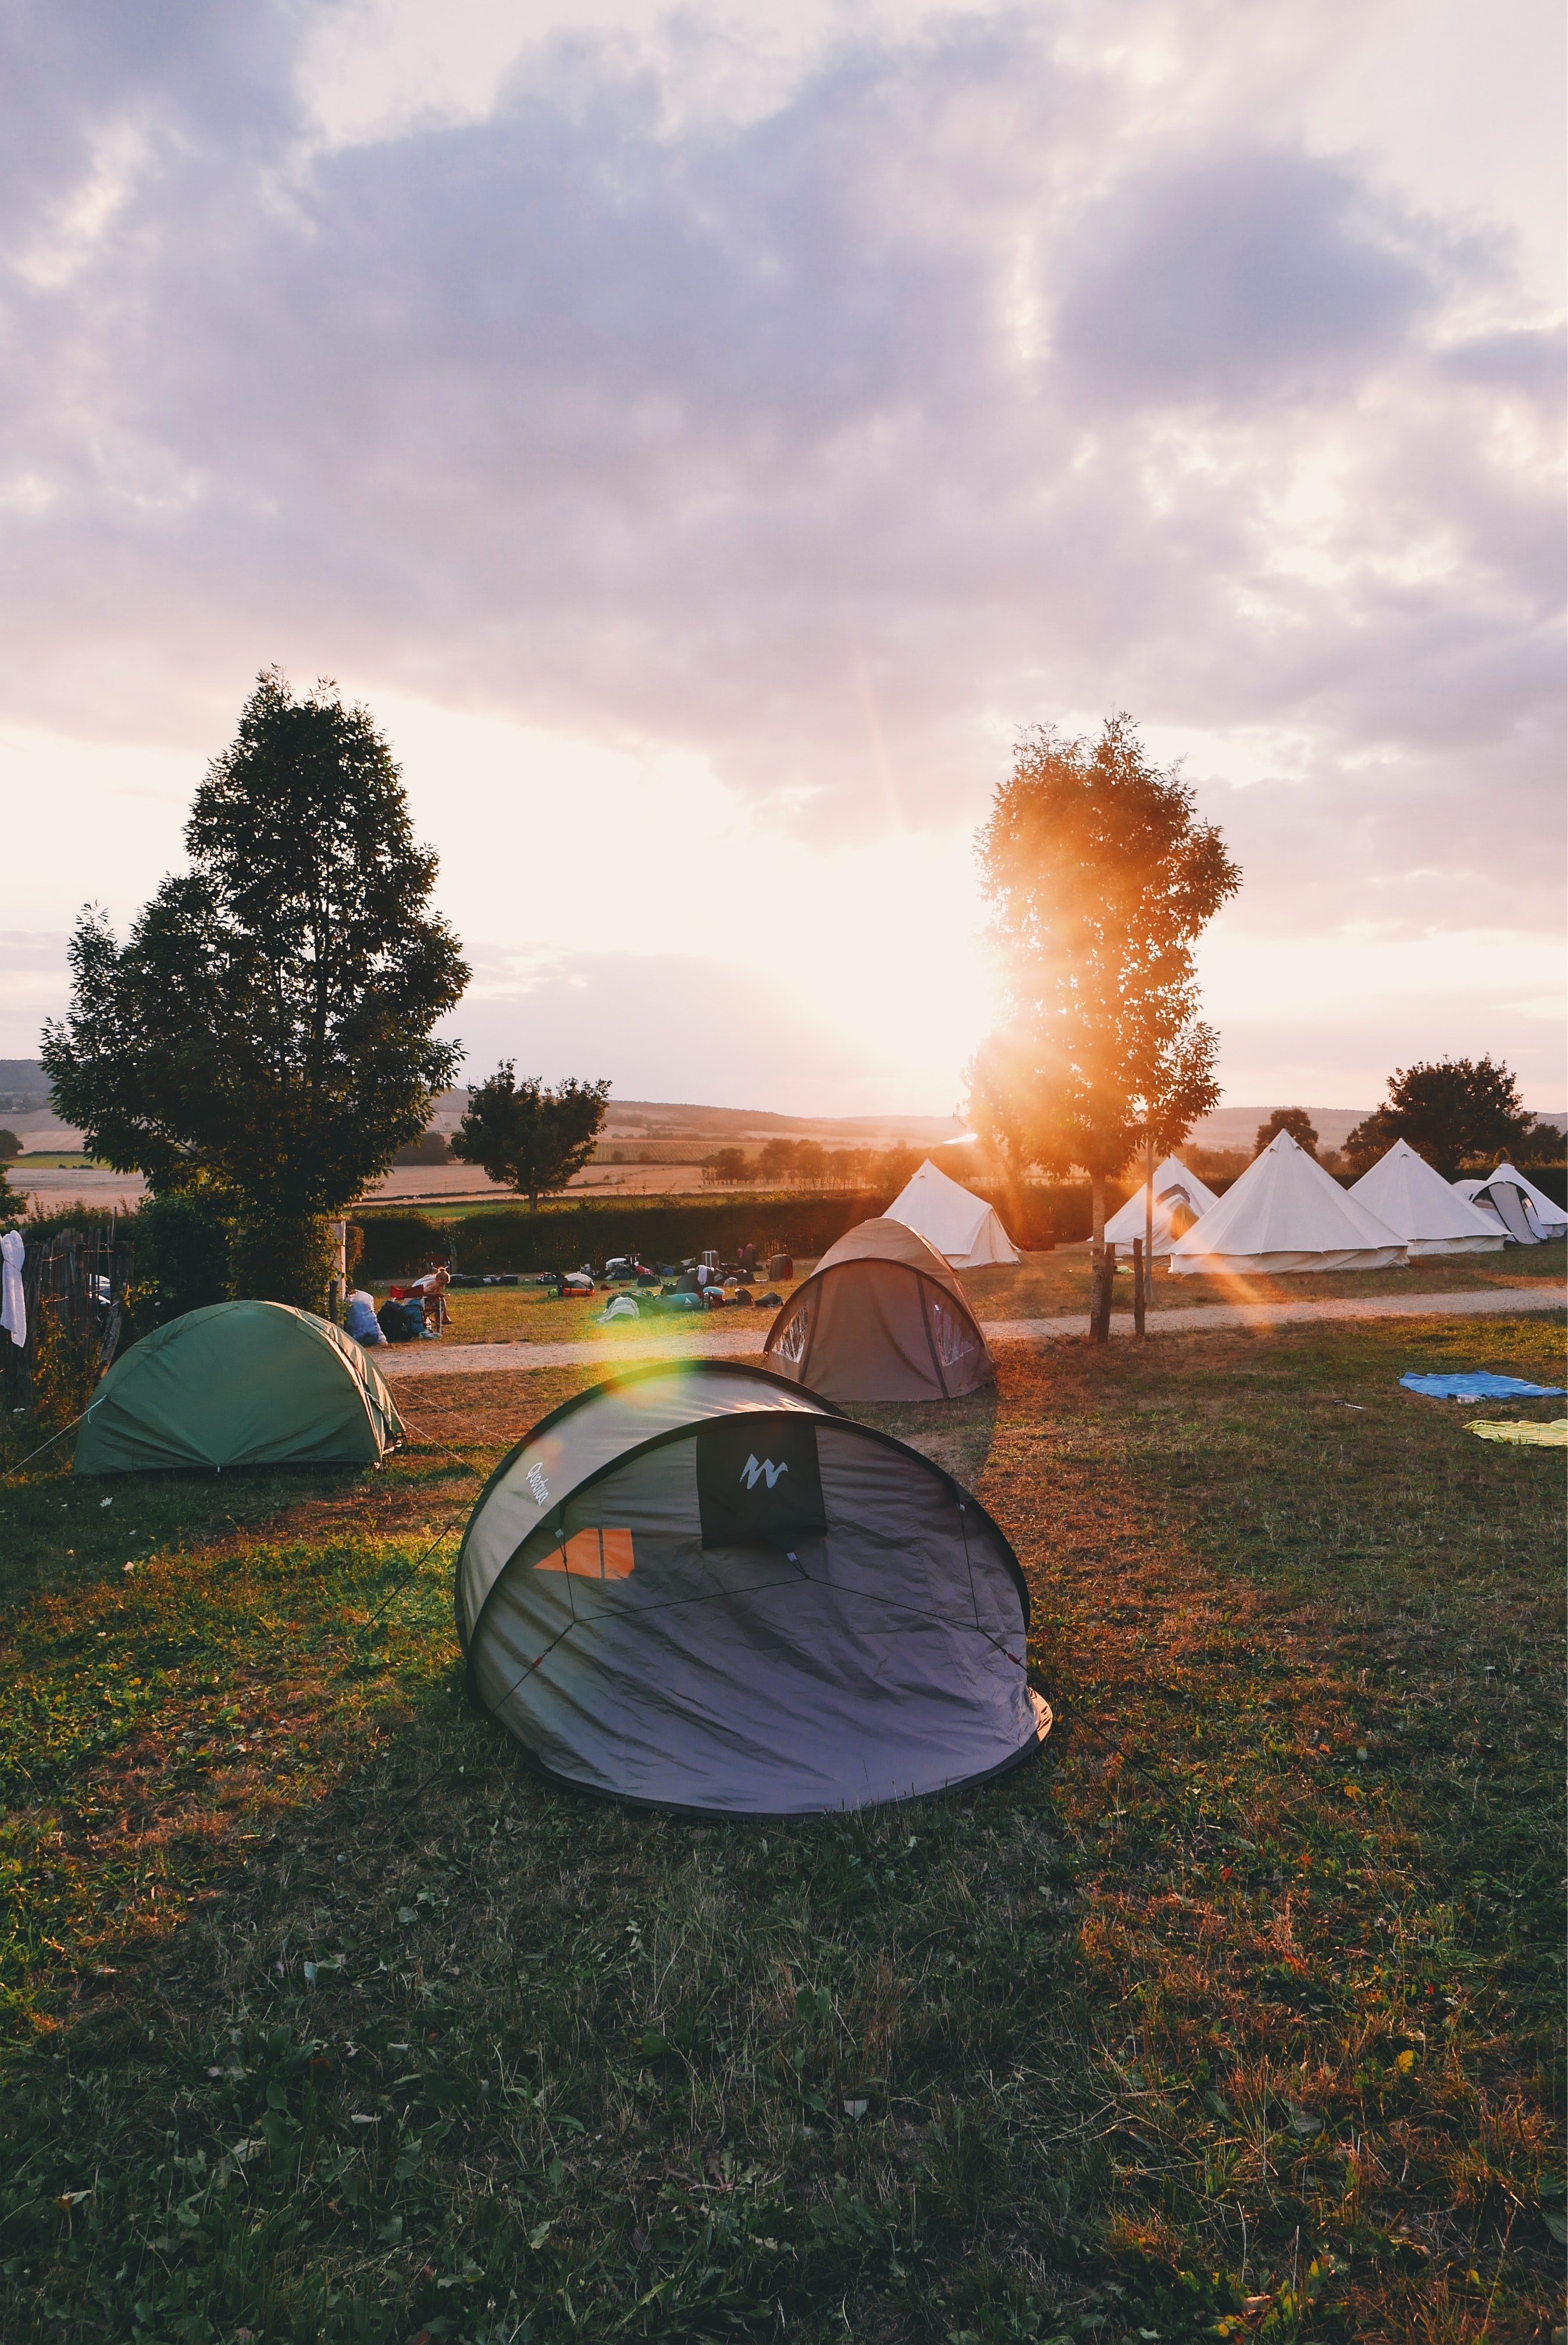 Tents on a flat ground | Source: Unsplash